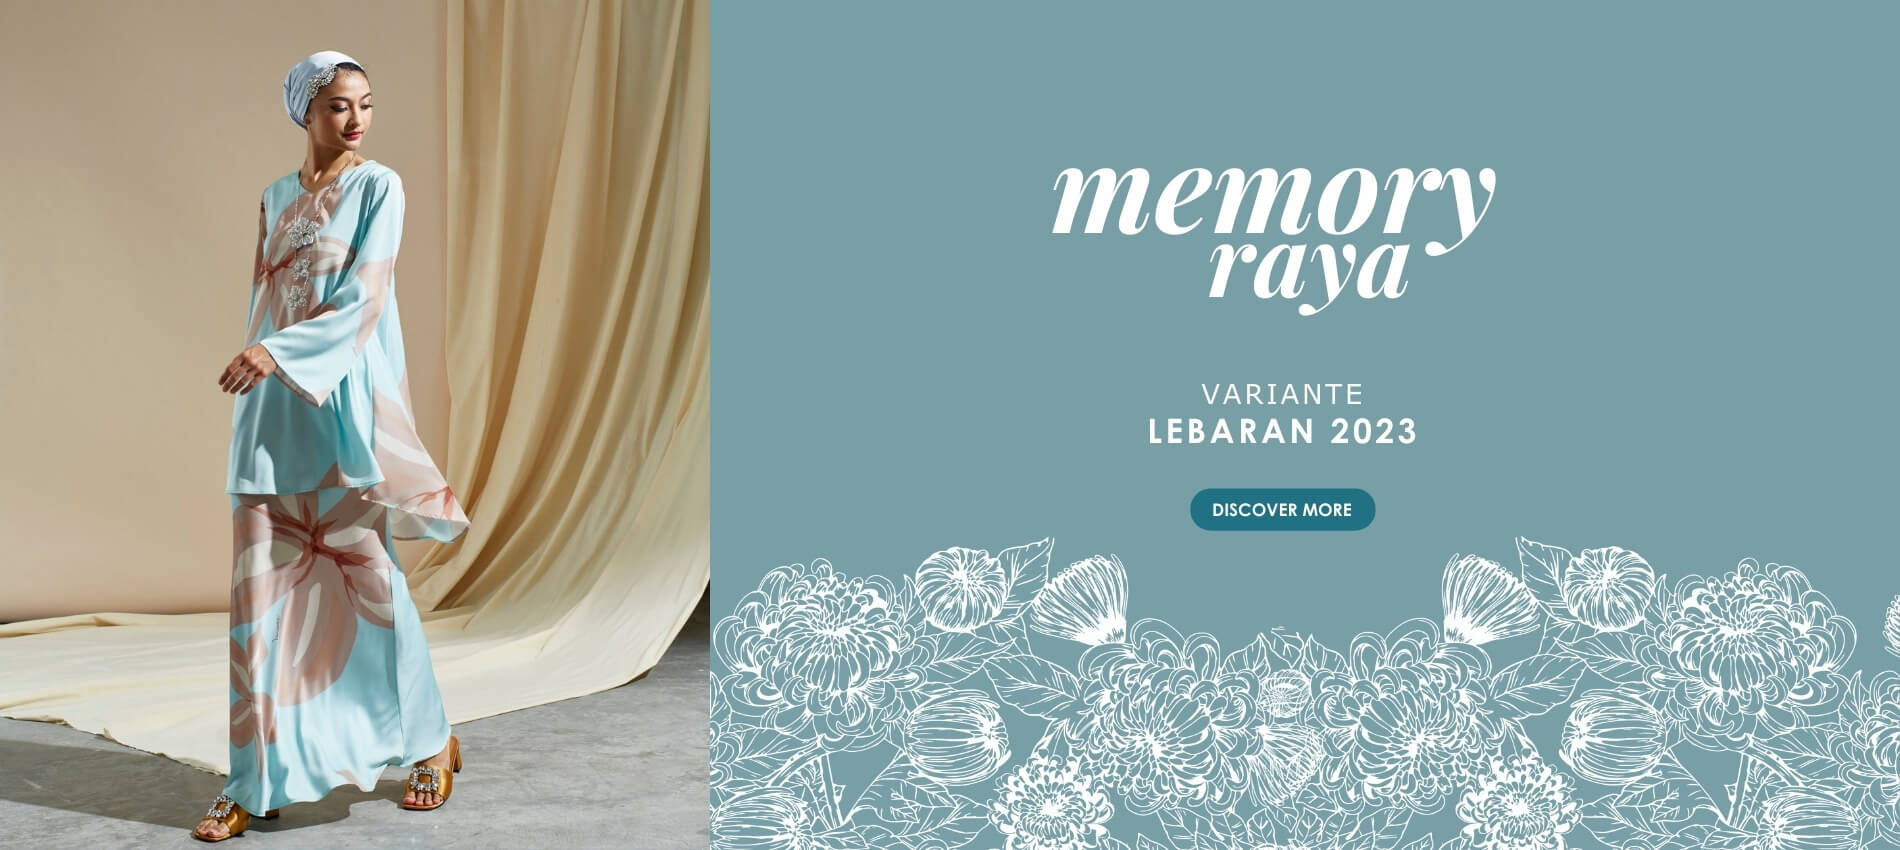 VARIANTE Lebaran Memory Raya March 2023 - 1